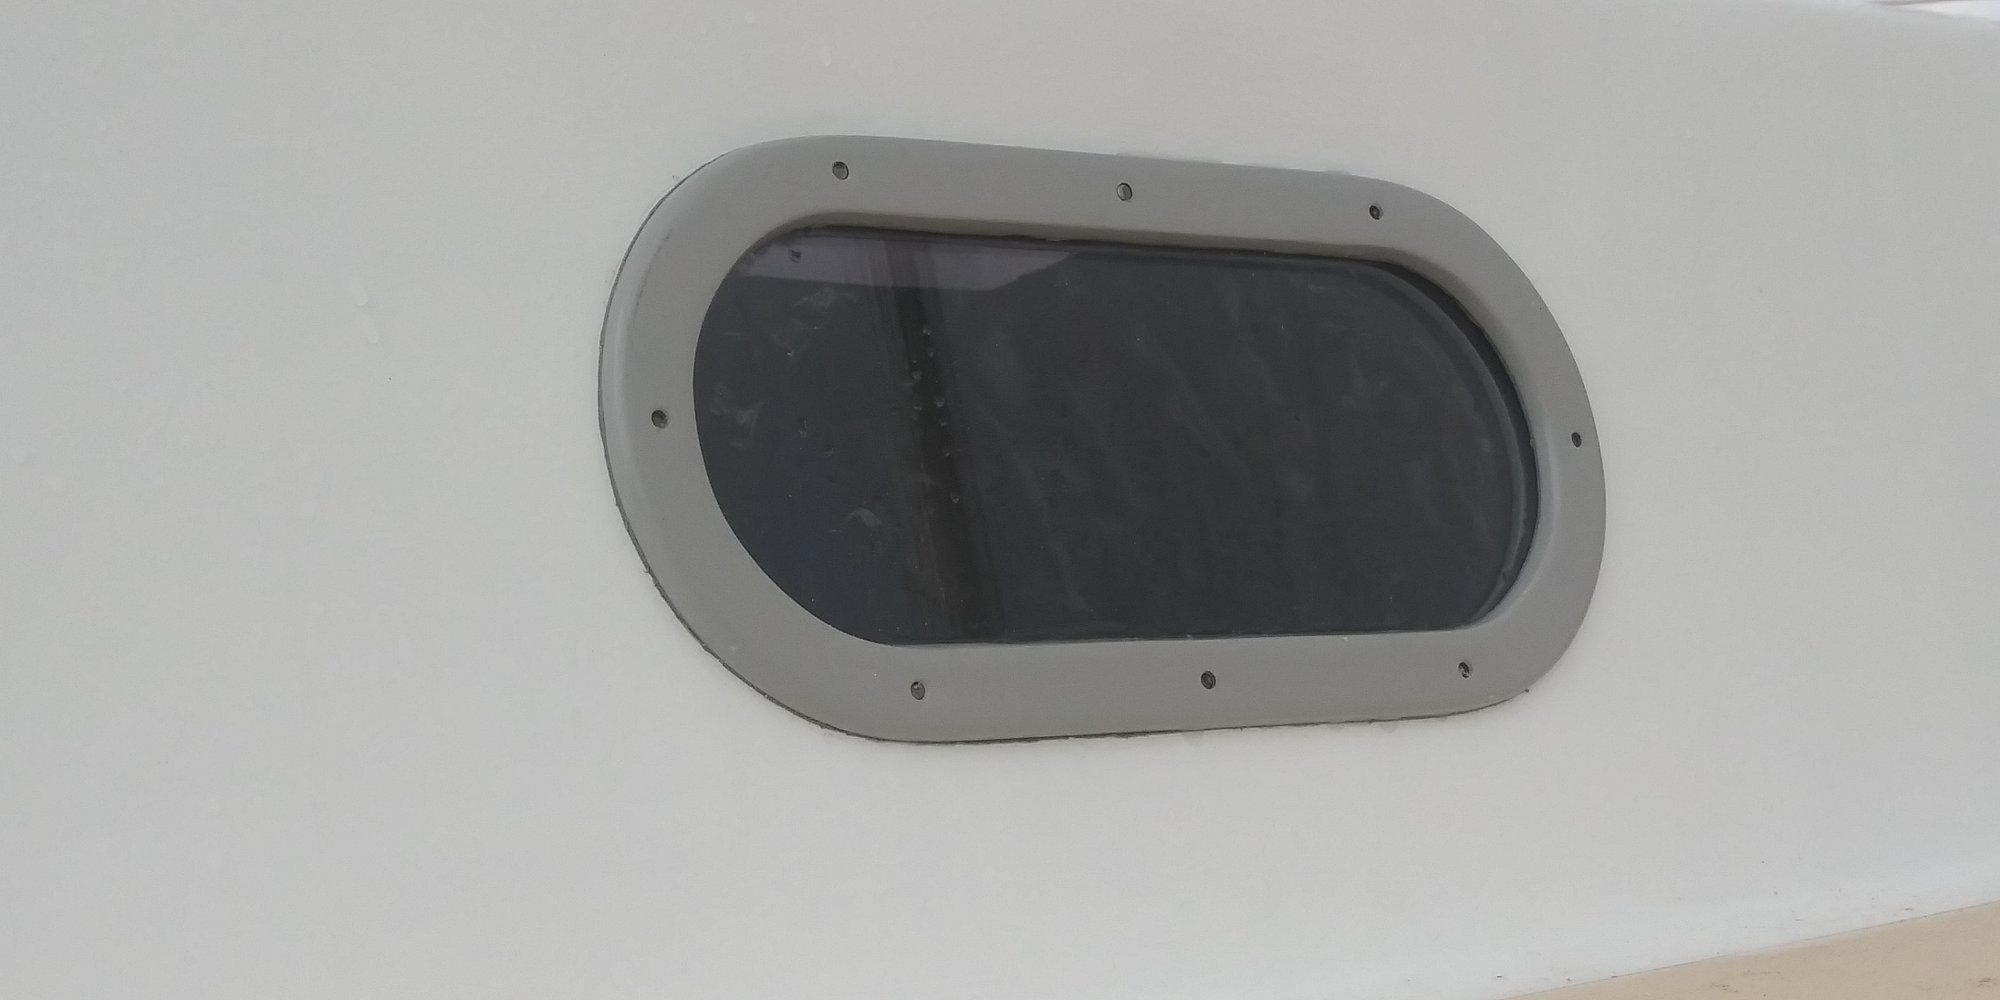 Boat Window Replacement, Port Windows & Boat Portlights